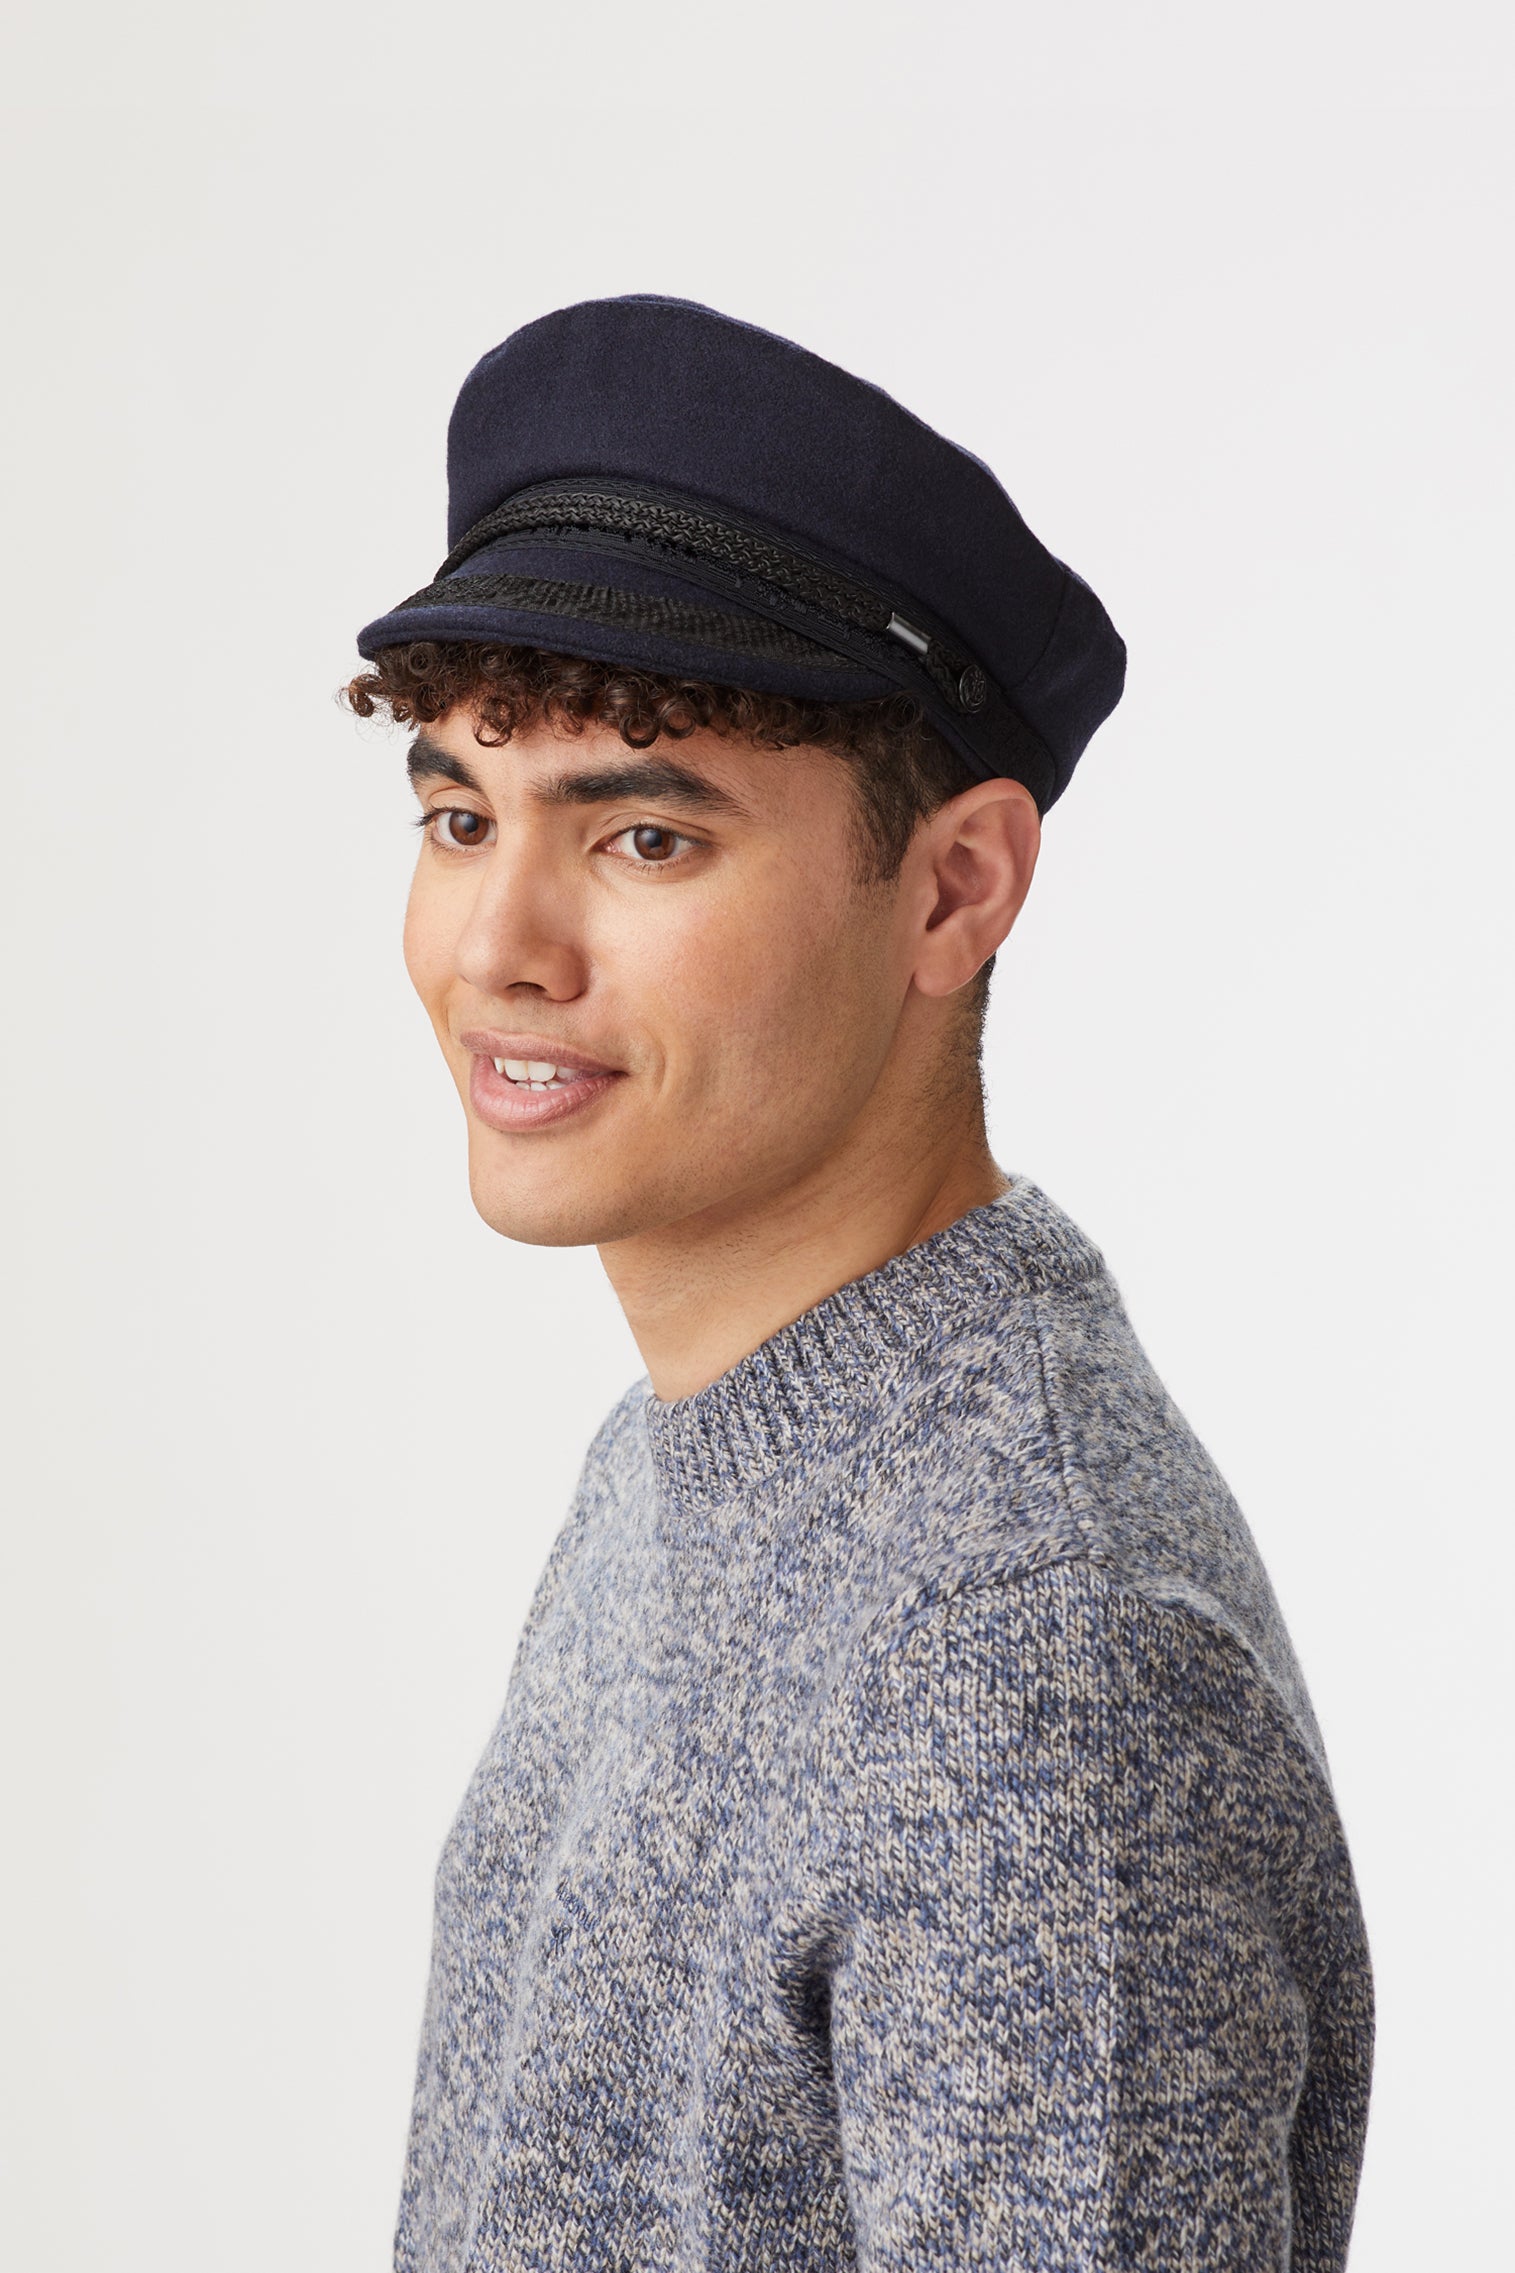 Skipper Cap - Hats for Tall People - Lock & Co. Hatters London UK